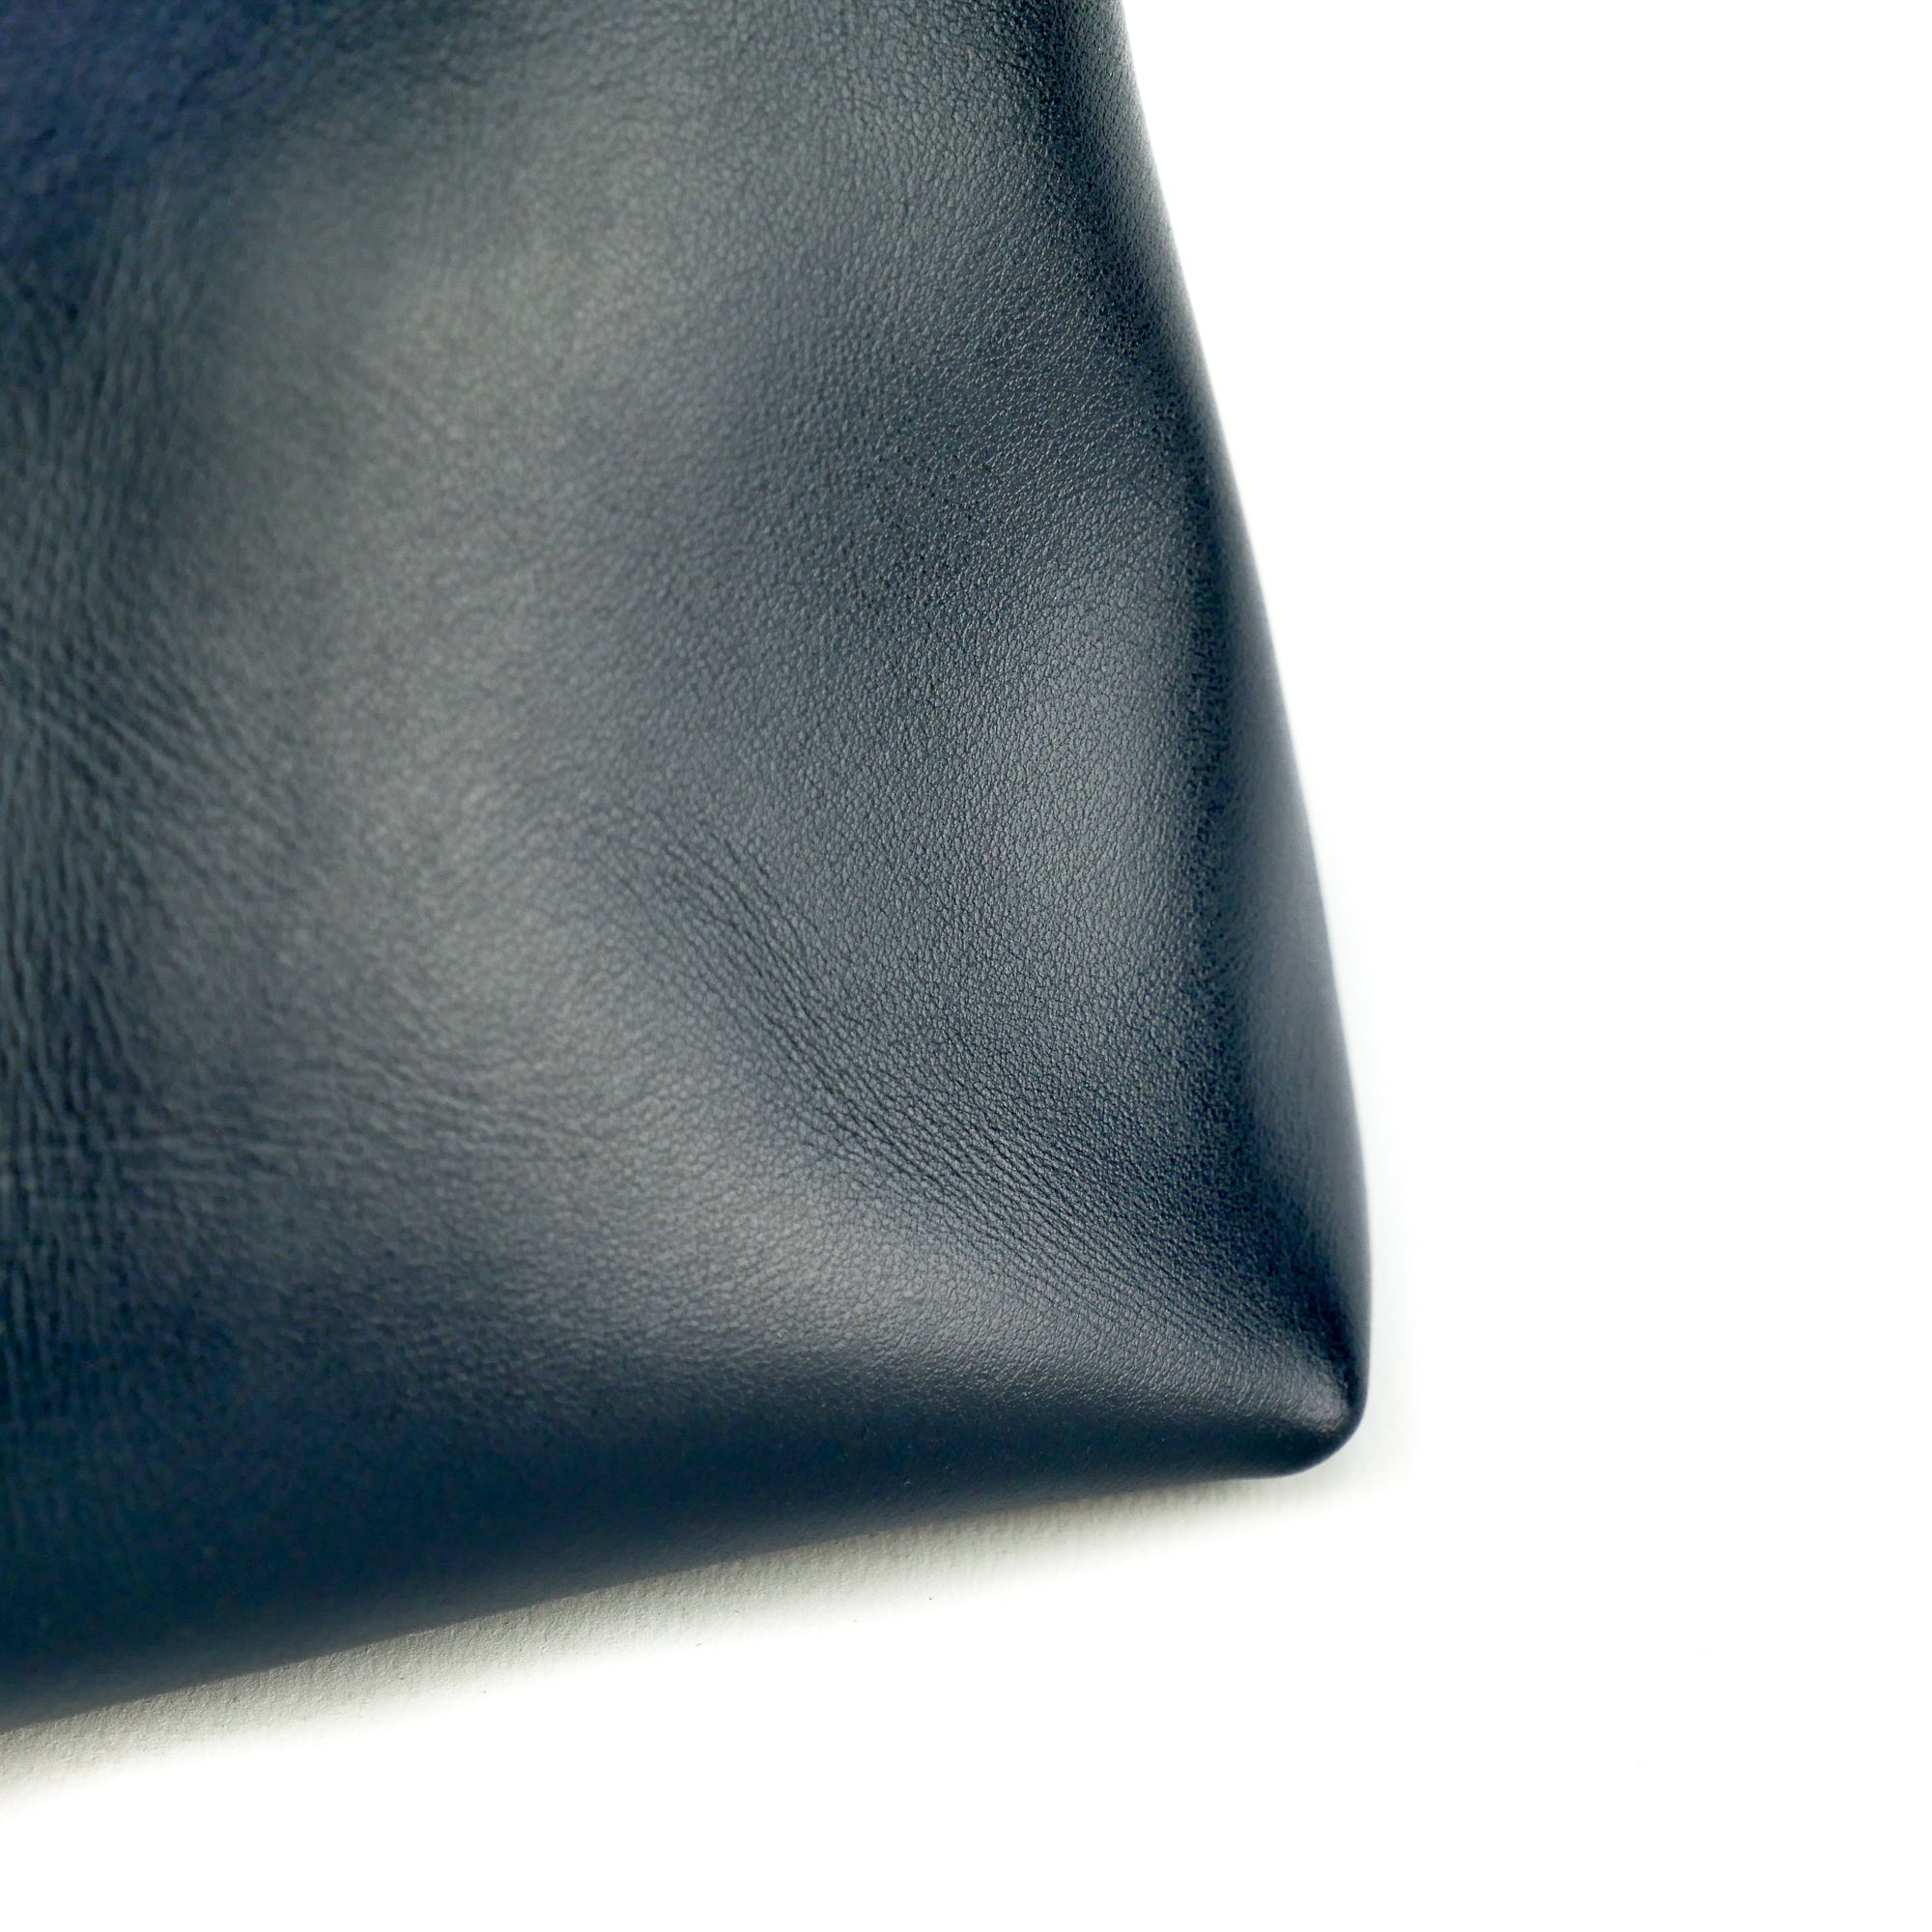 Navy Leather Travel Bag - Roam